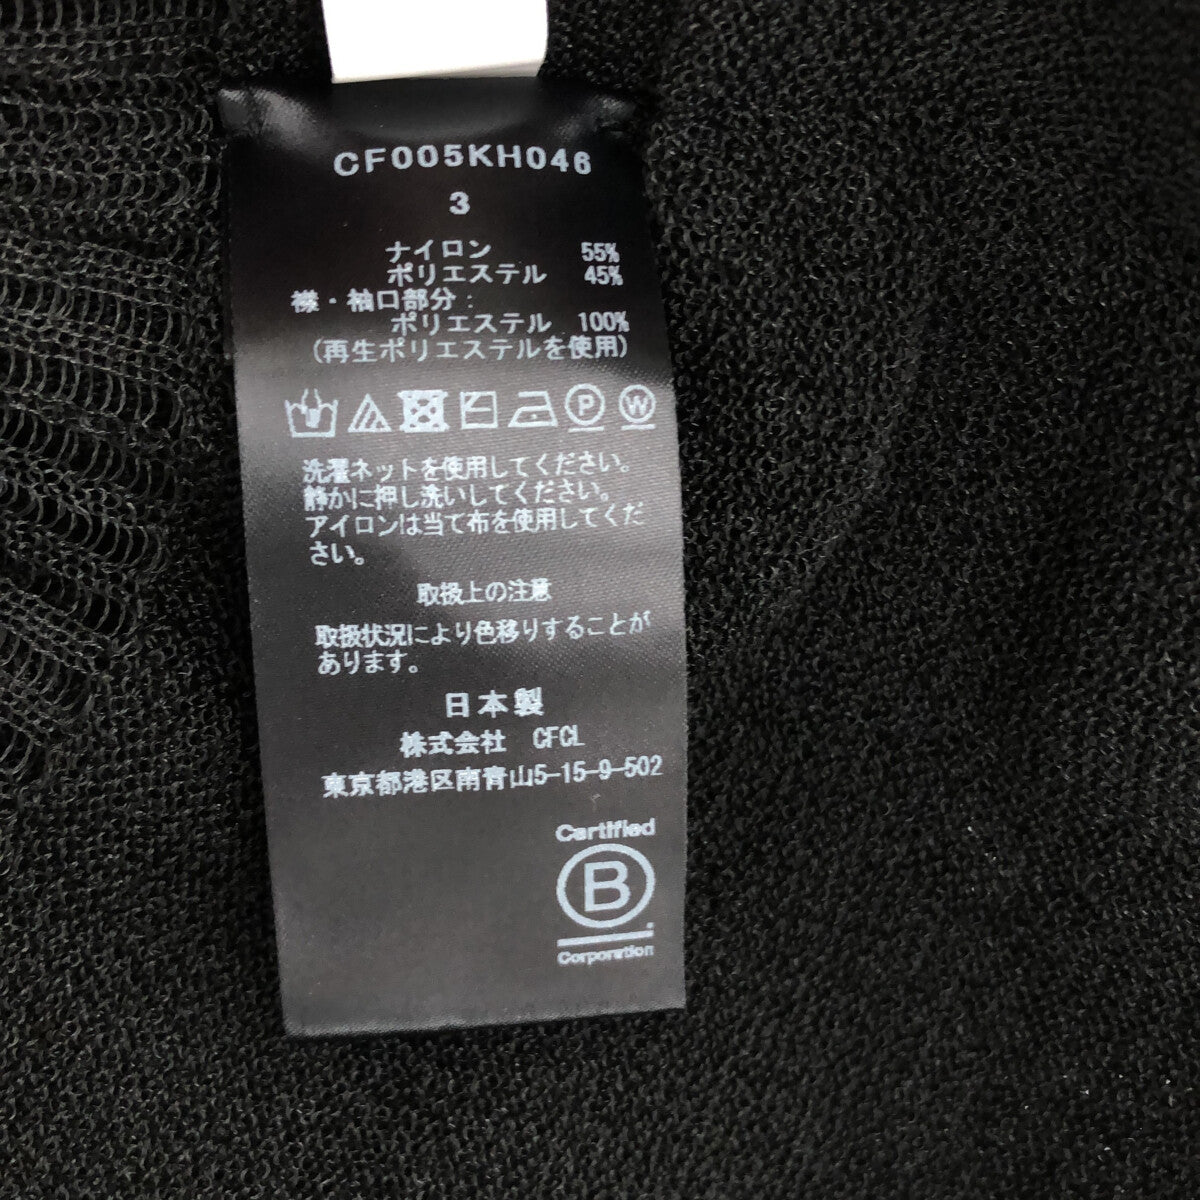 churulady美品 CFCL POTTERY DRESS 5 フレアドレス ワンピース 黒 3